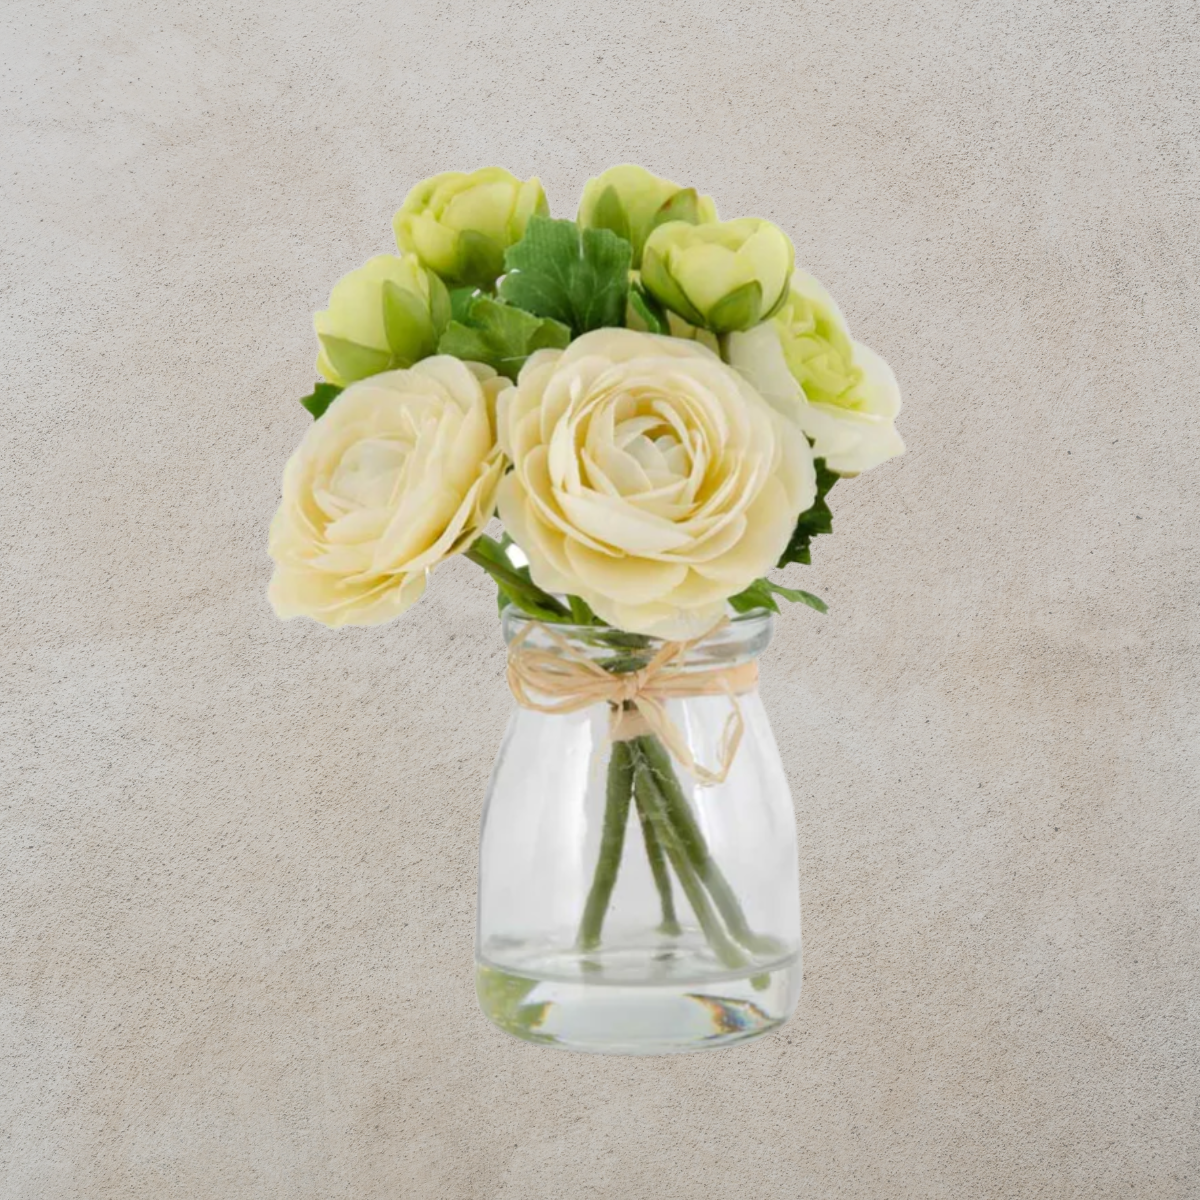 White Ranunculus Bouquet in Glass Jar